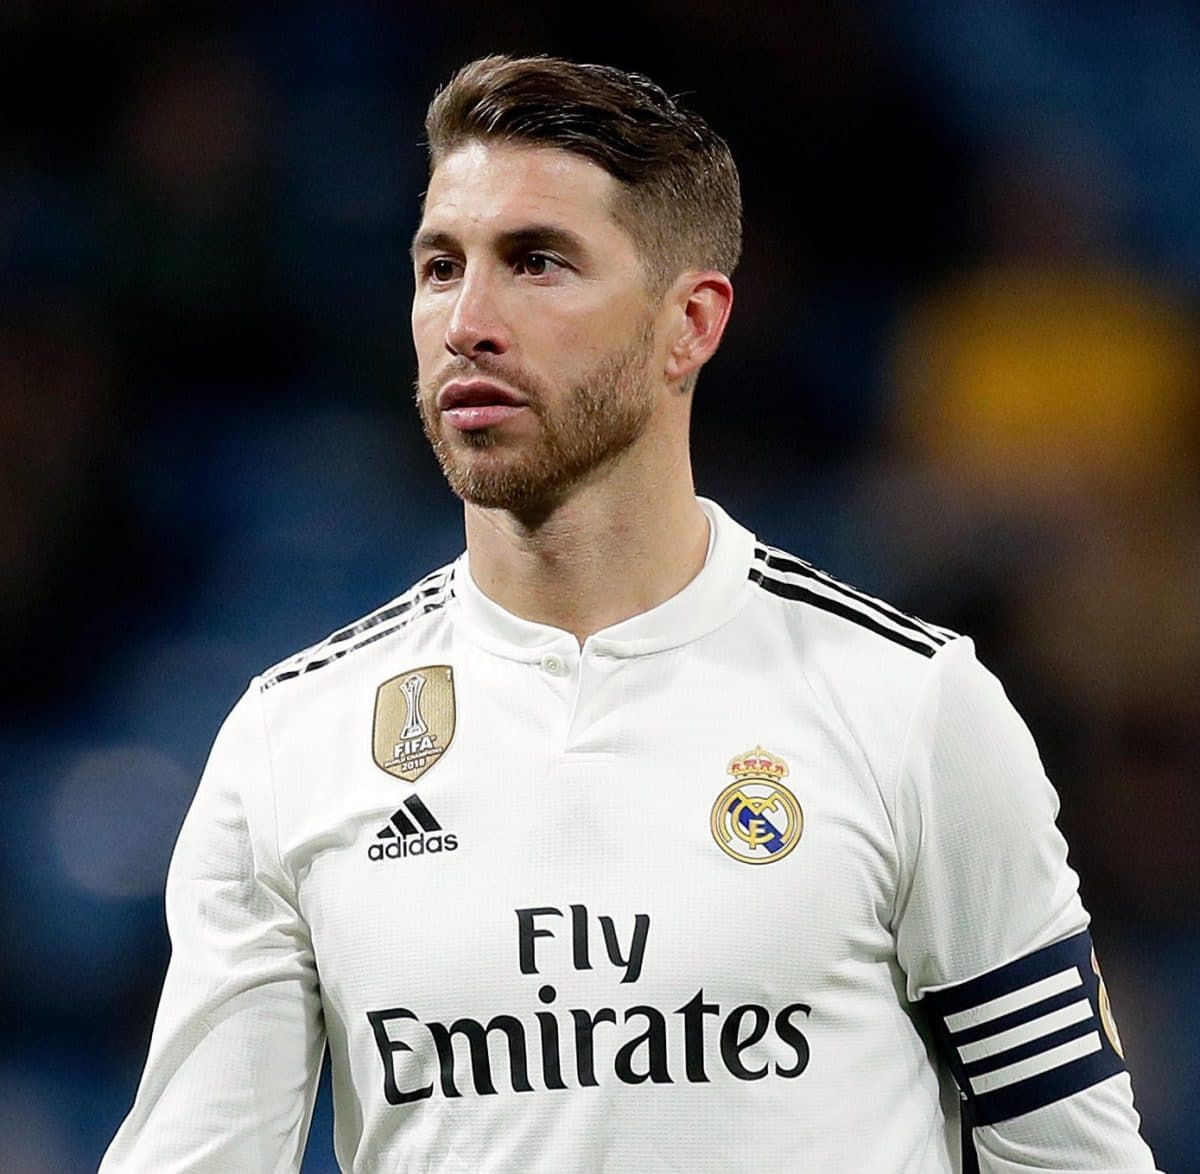 Ramos strike against Getafe, draws Real Madrid close to La Liga title